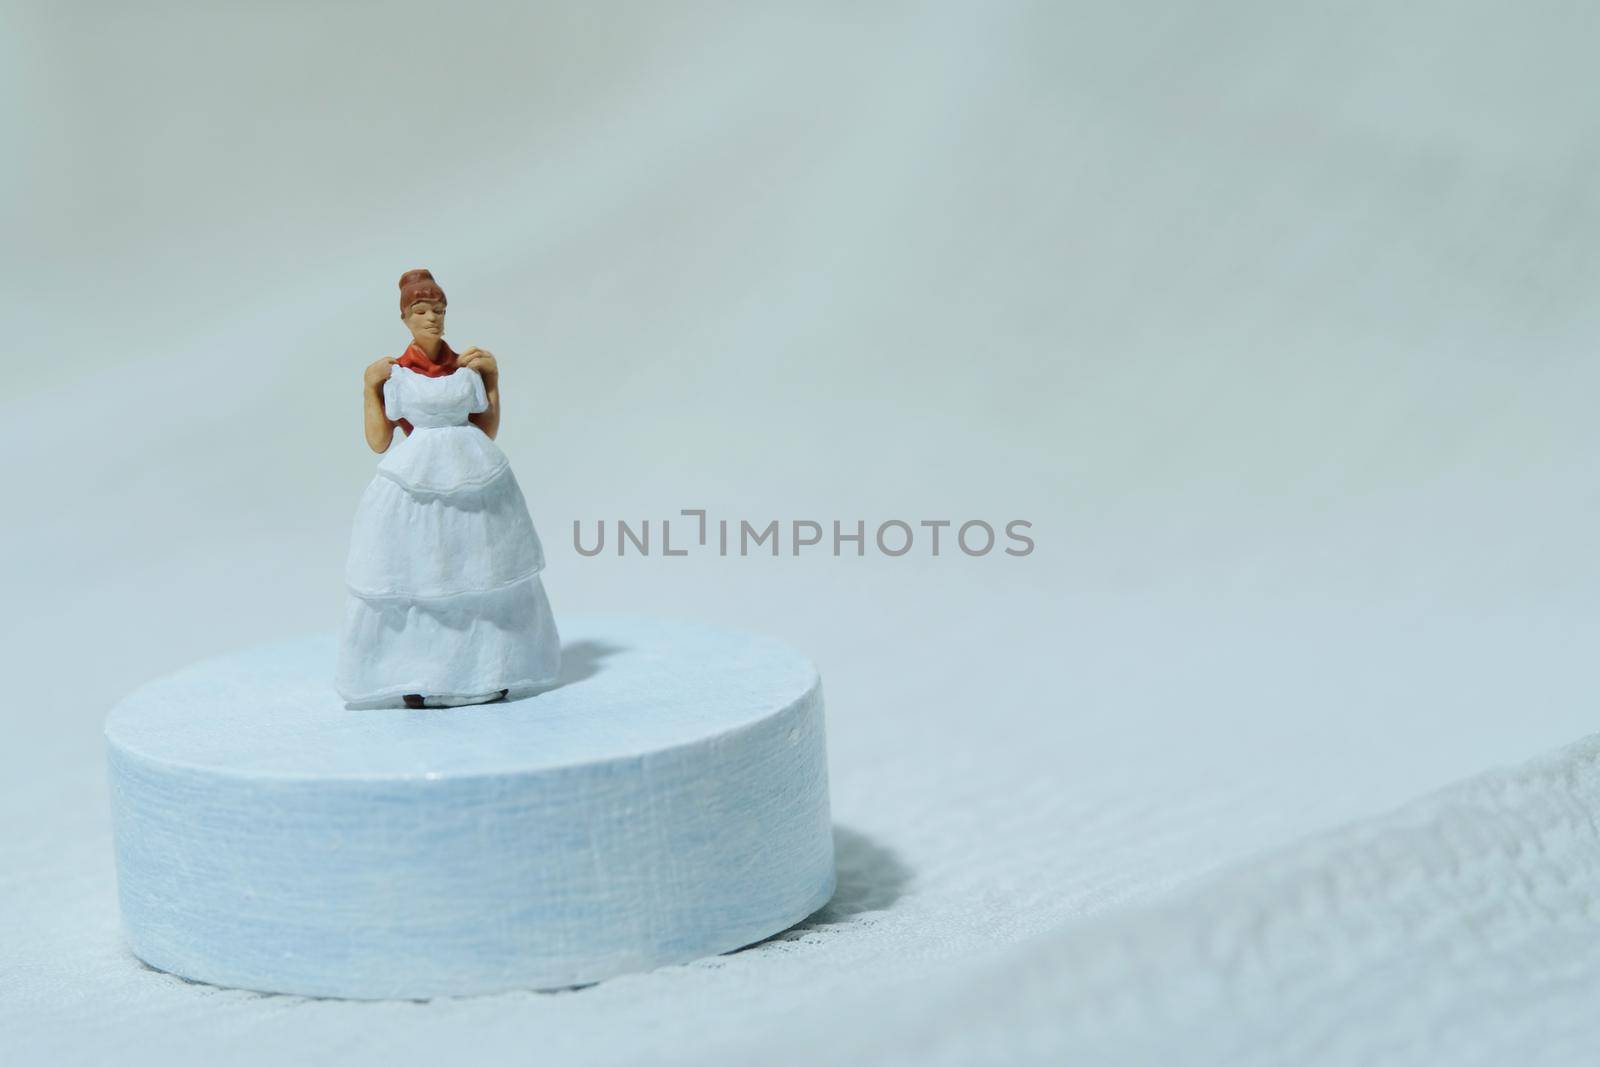 Women miniature people stand above white podium trying wedding dress. Image photo by Macrostud